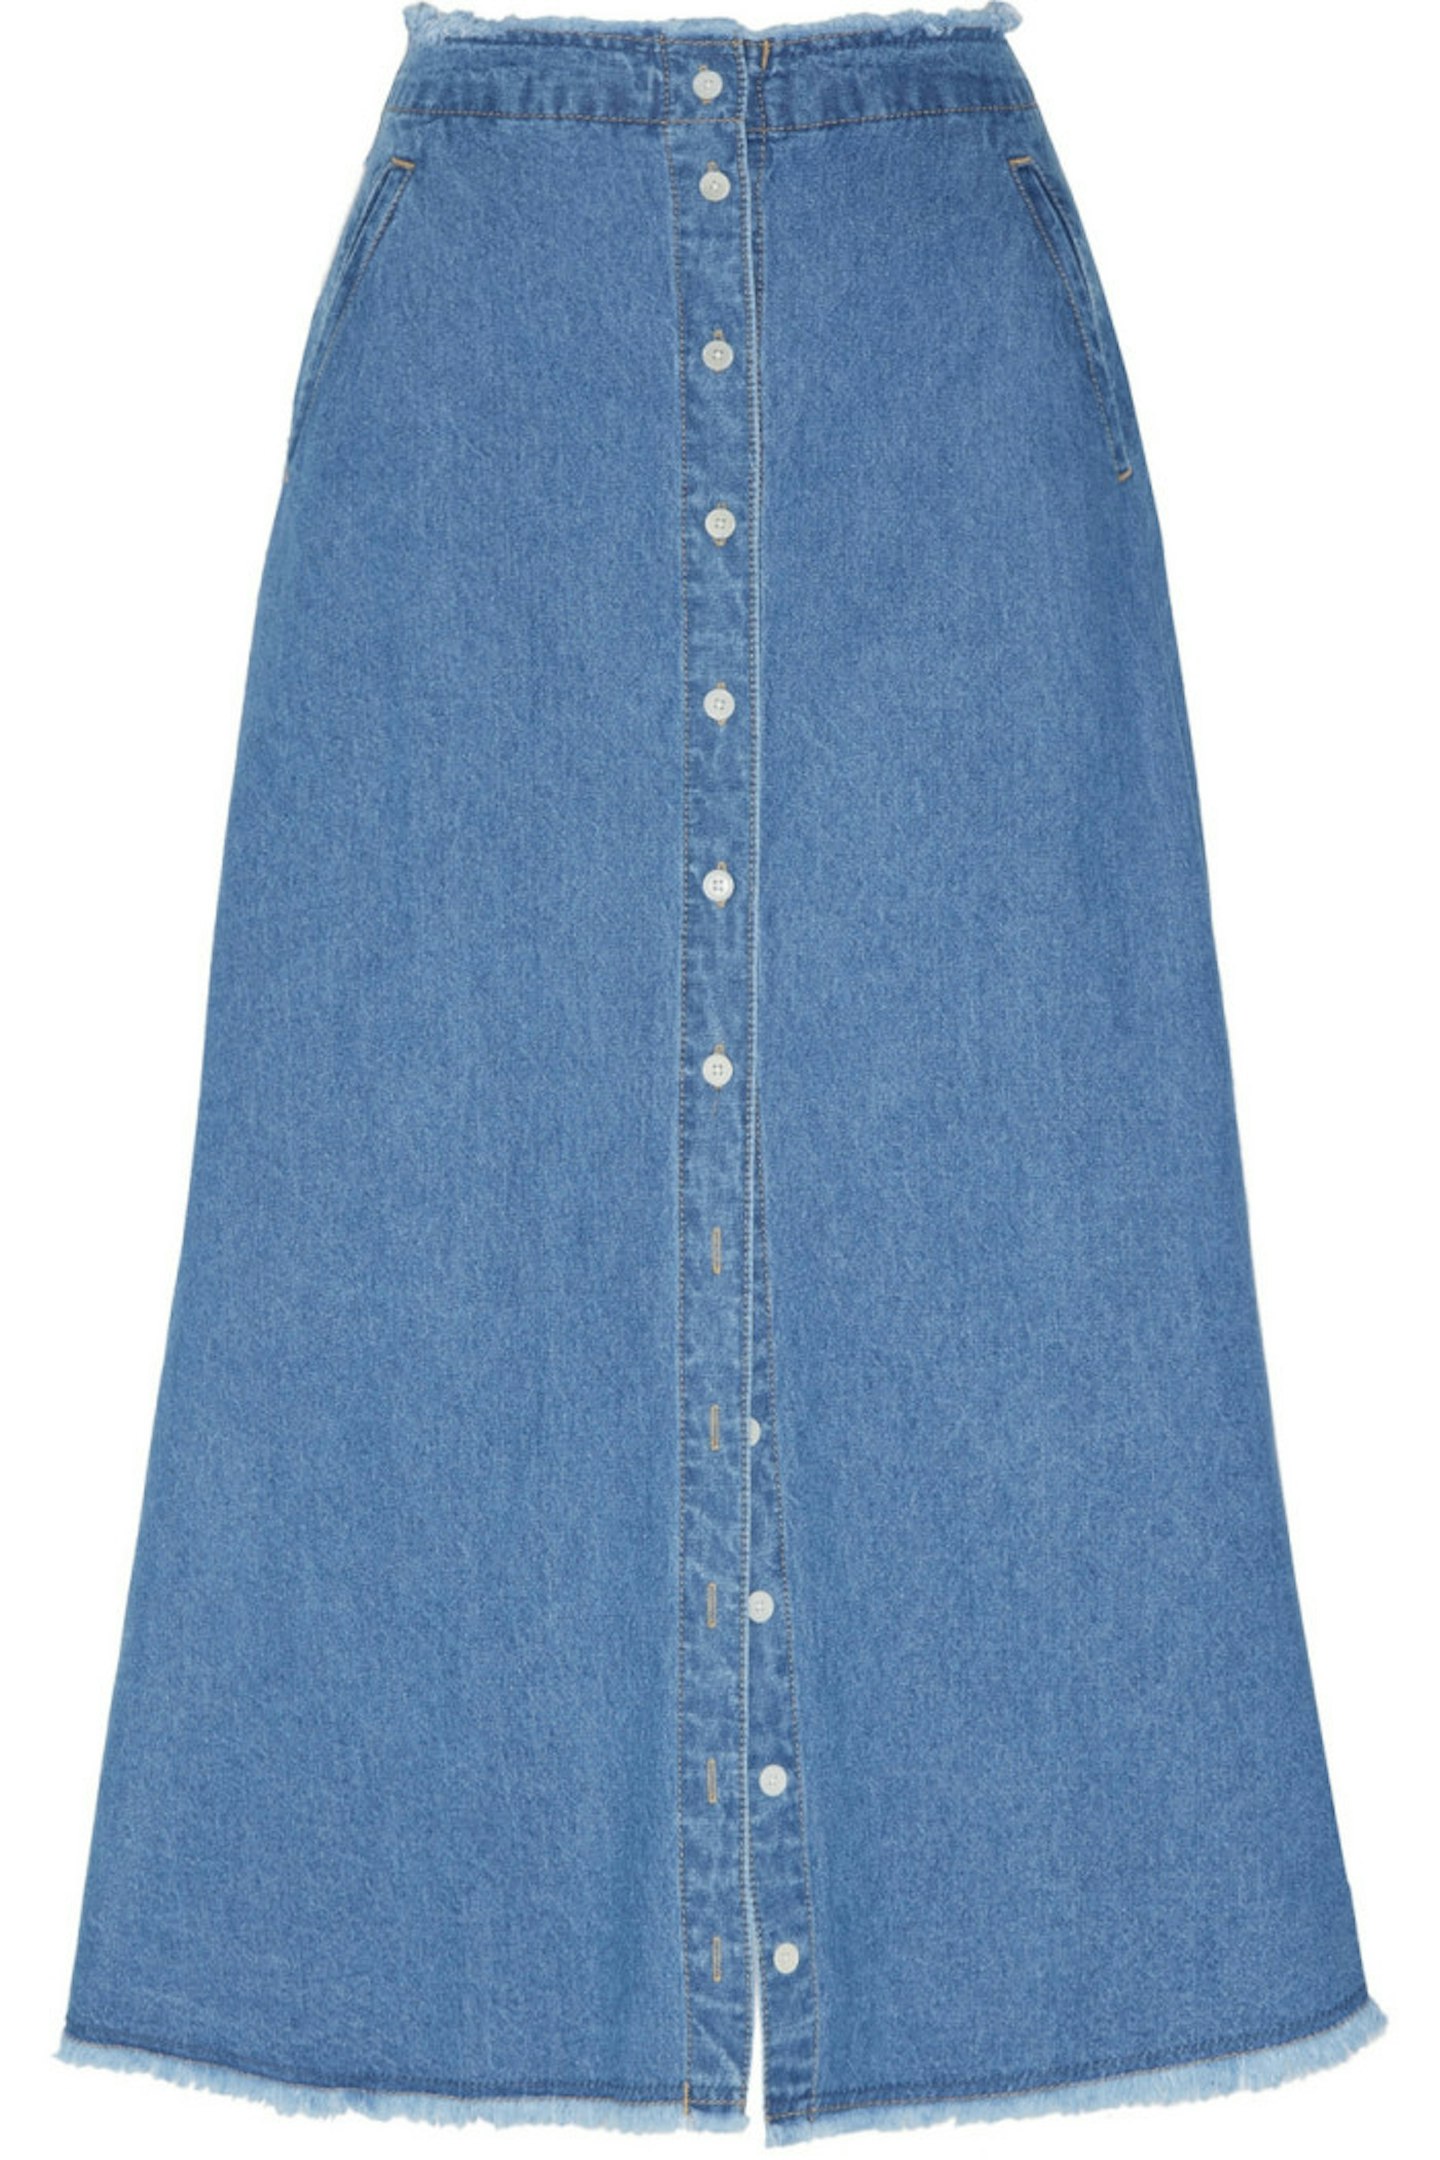 Steve J & Yoni P Denim Midi Skirt, £205.00